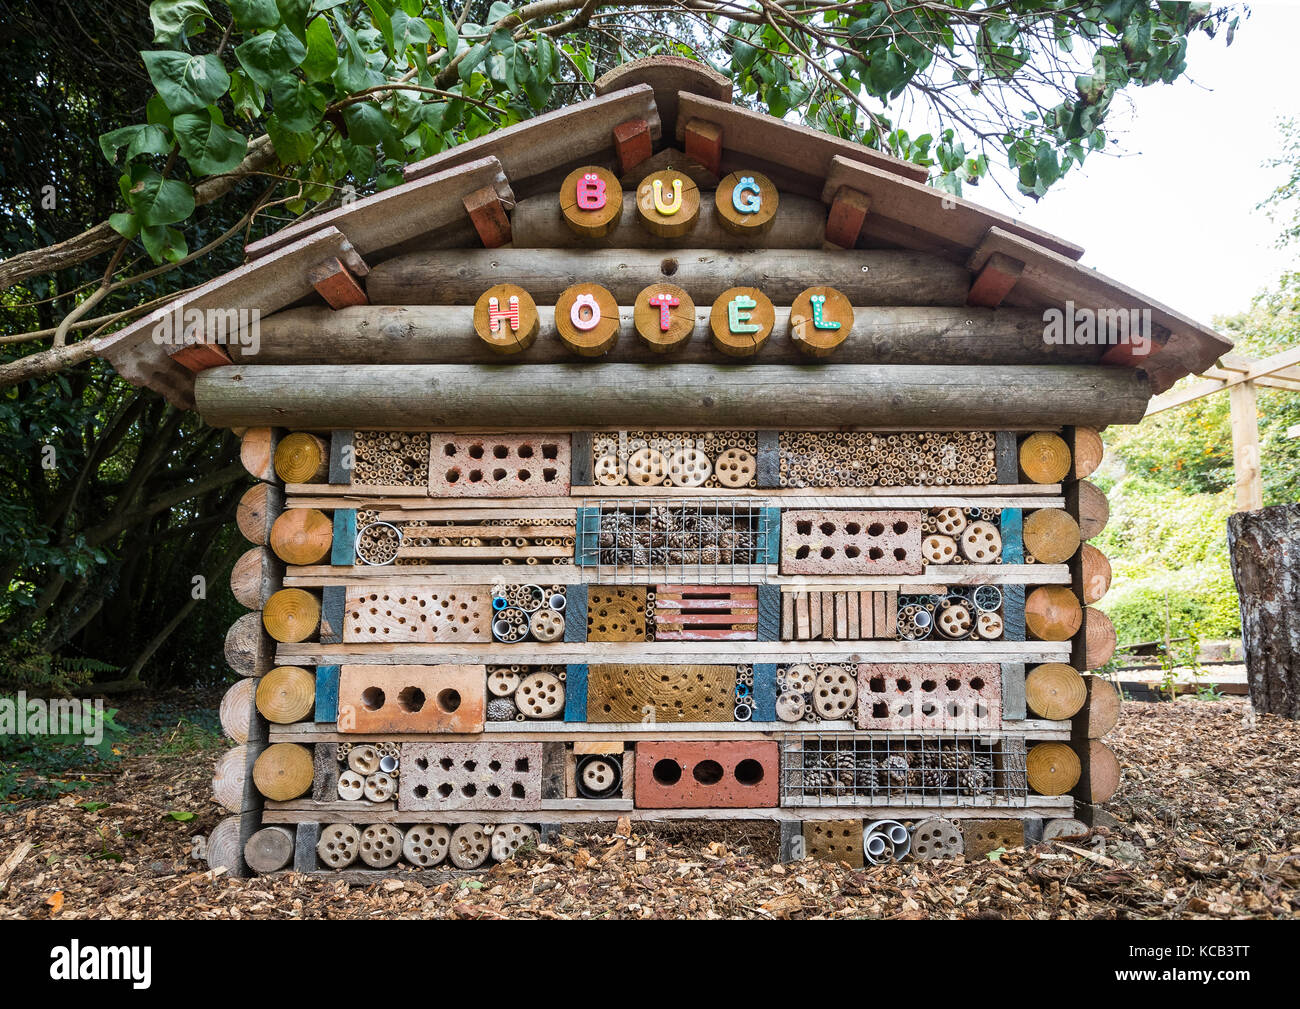 A bug hotel in a communal garden Stock Photo